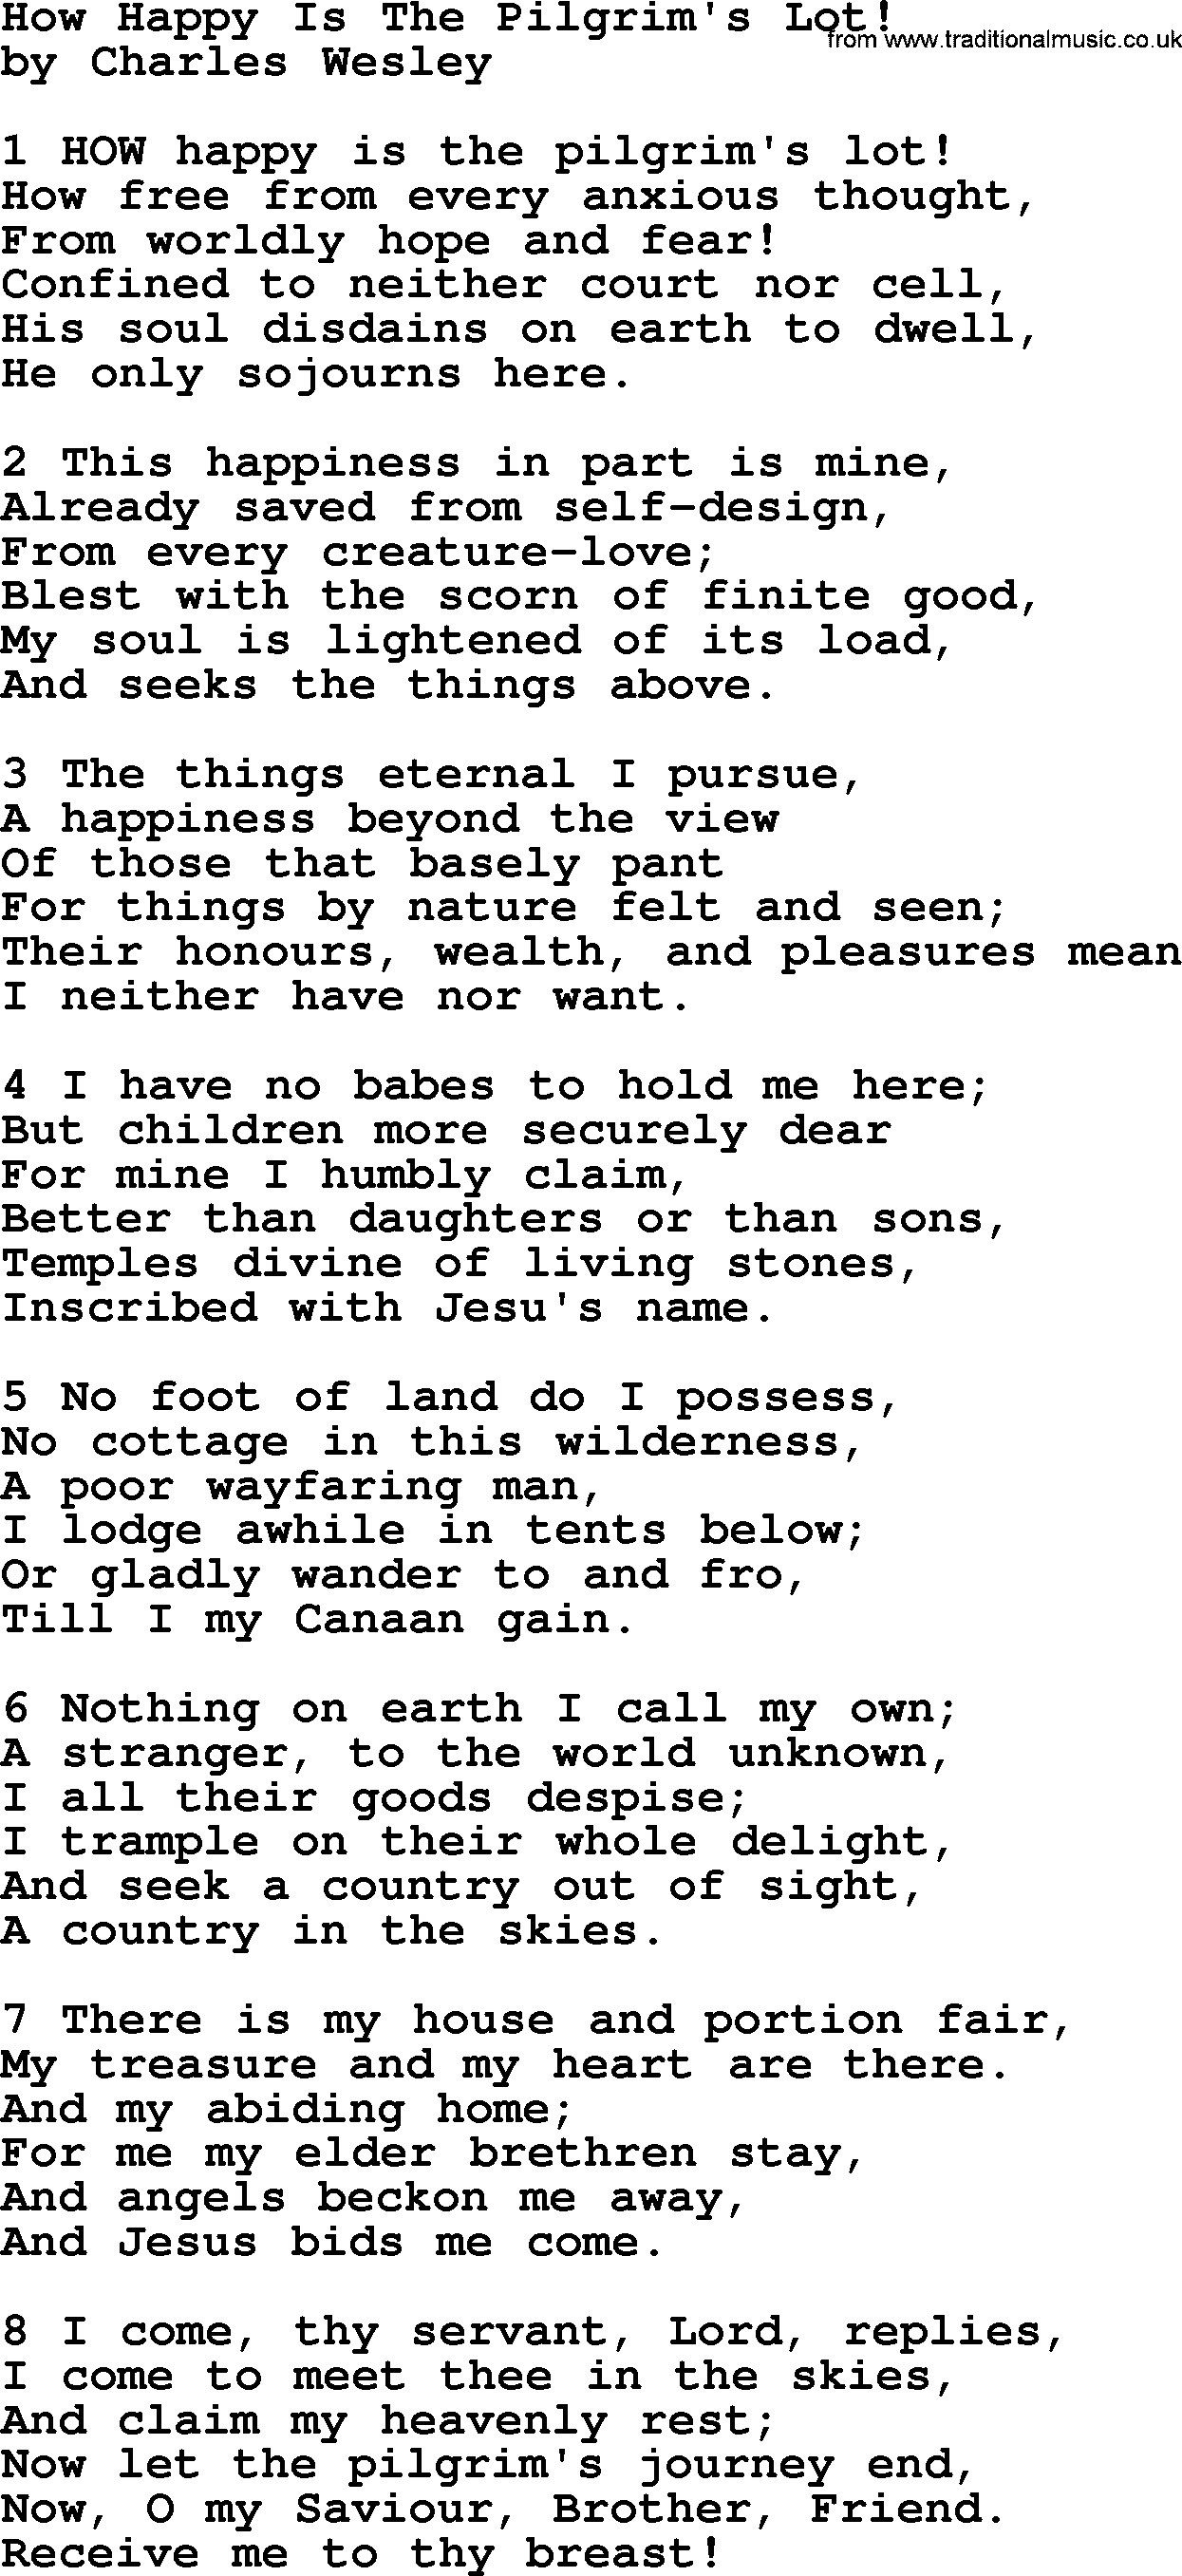 Charles Wesley hymn: How Happy Is The Pilgrim's Lot!, lyrics